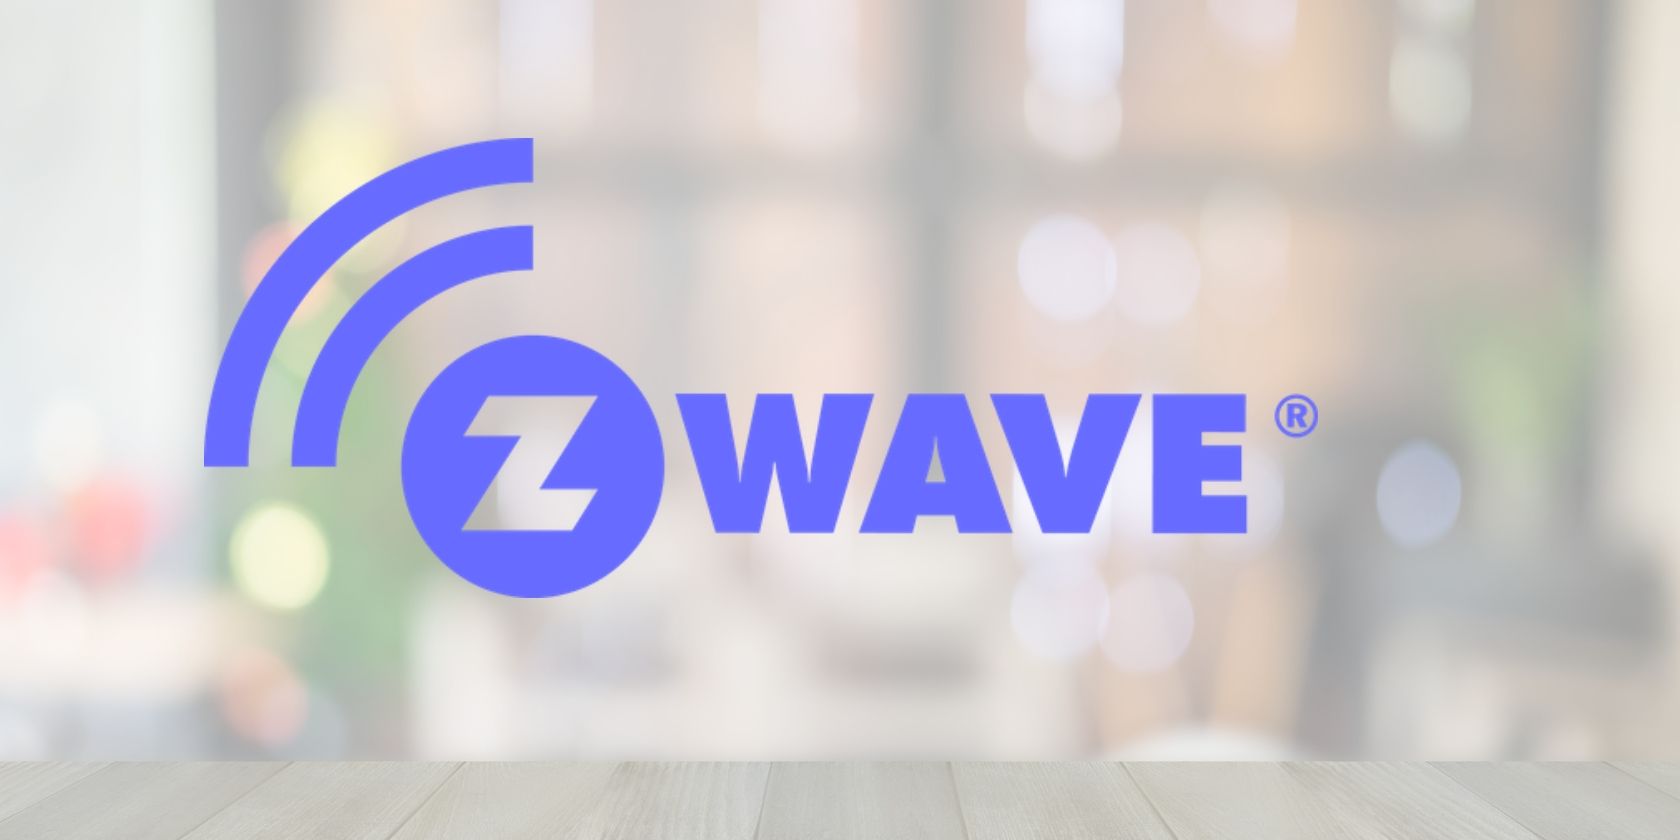 Z-wave logo on a blurred background